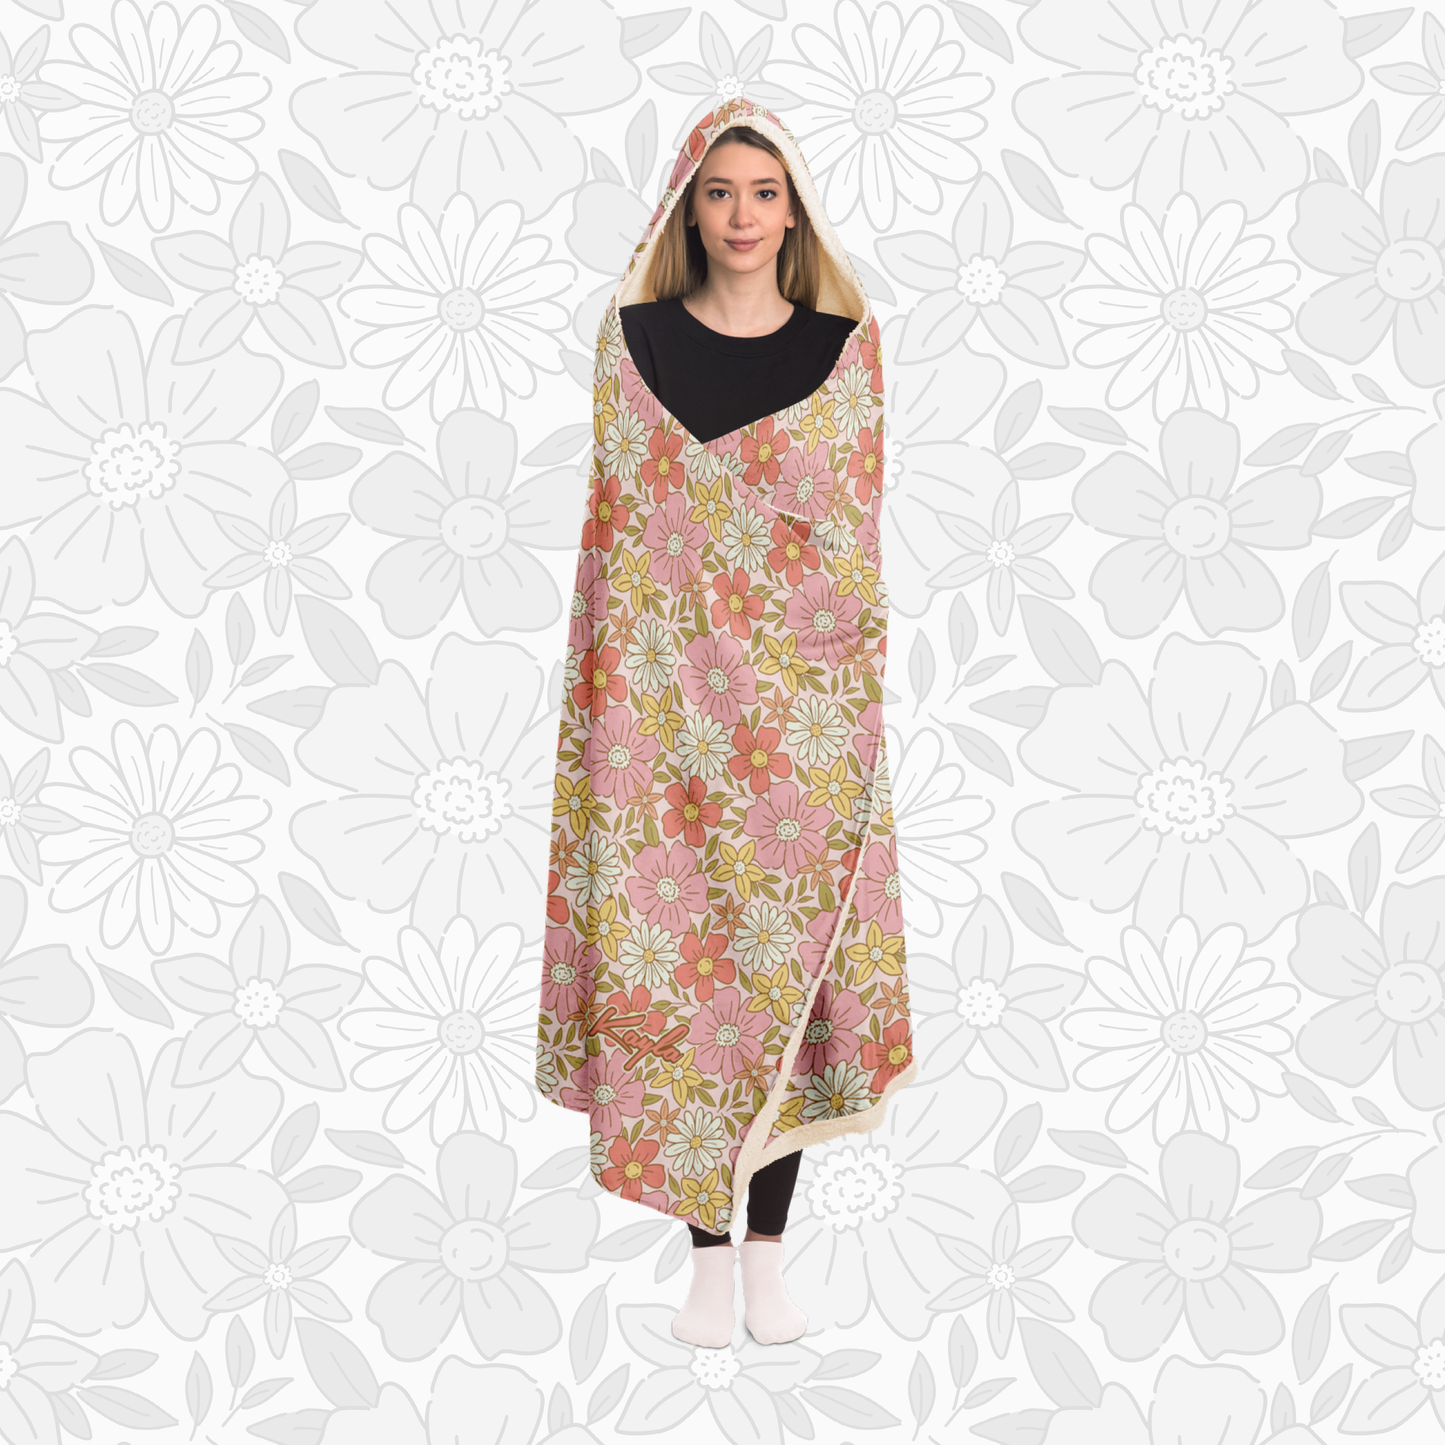 Hooded Blanket (Retro Florals)